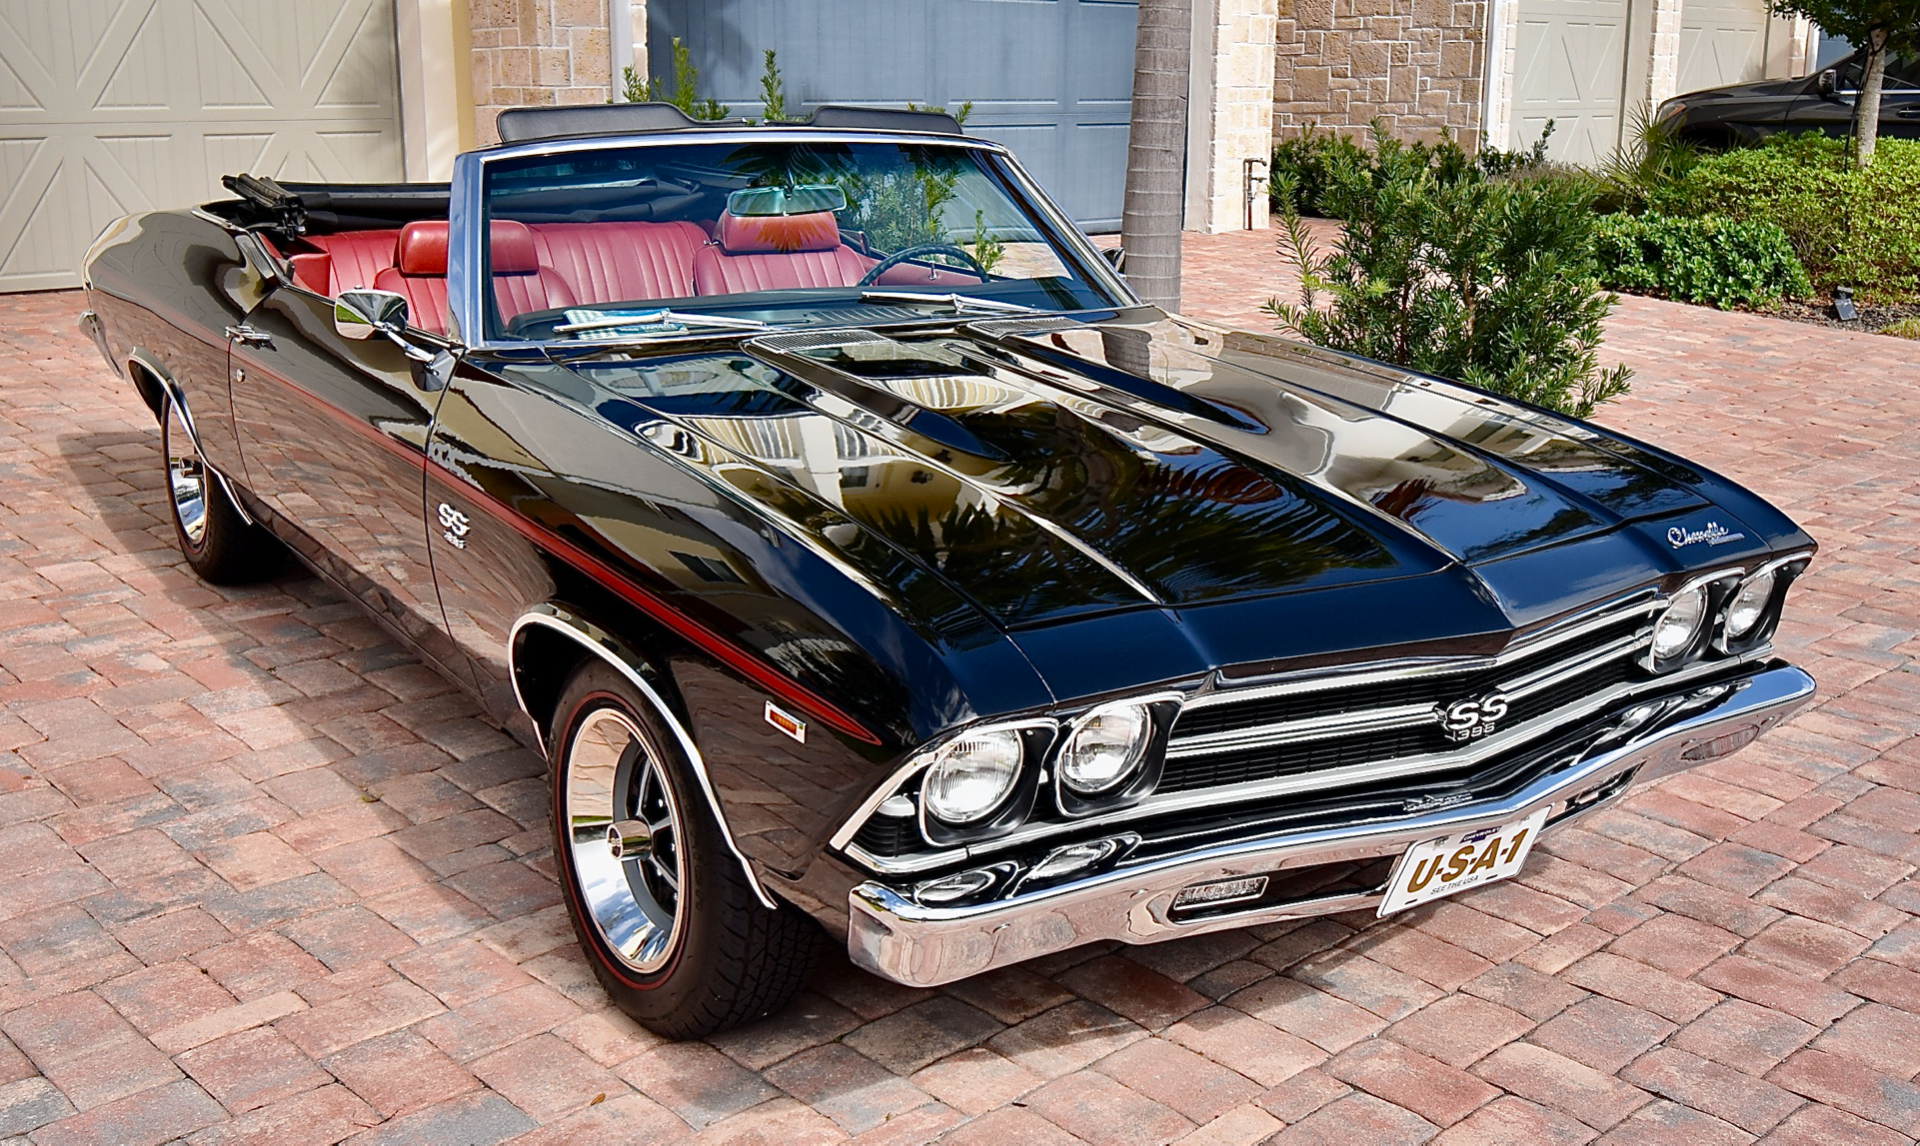 <img src="1969-chevelle-4.png" alt="1969 Chevrolet Chevelle convertible in Tuxedo Black">